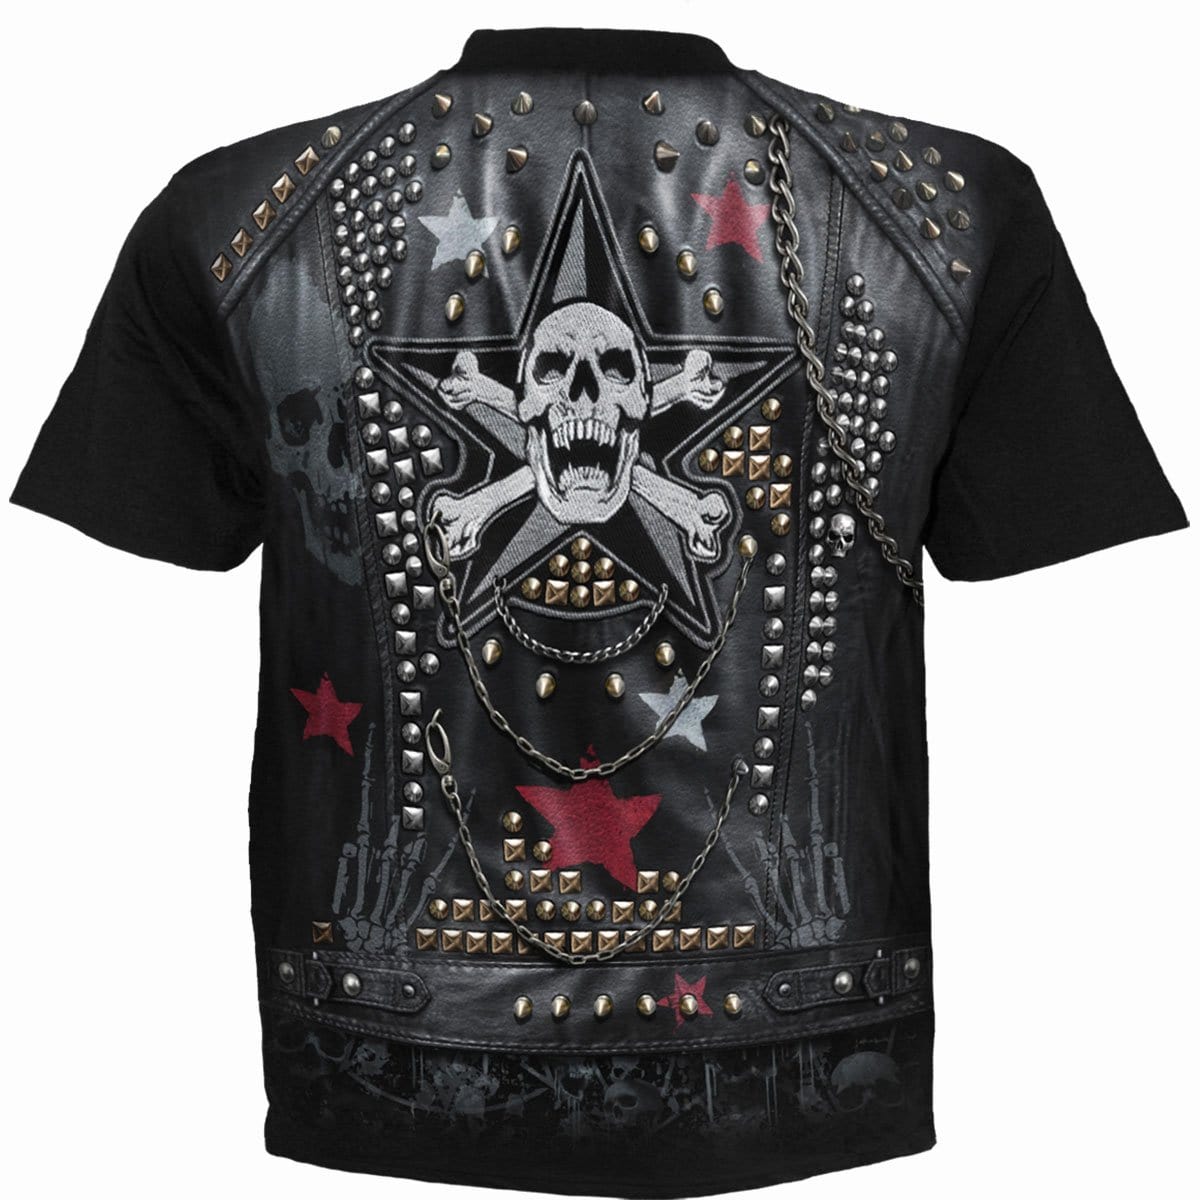 GOTH METAL - Allover T-Shirt Black - Spiral USA